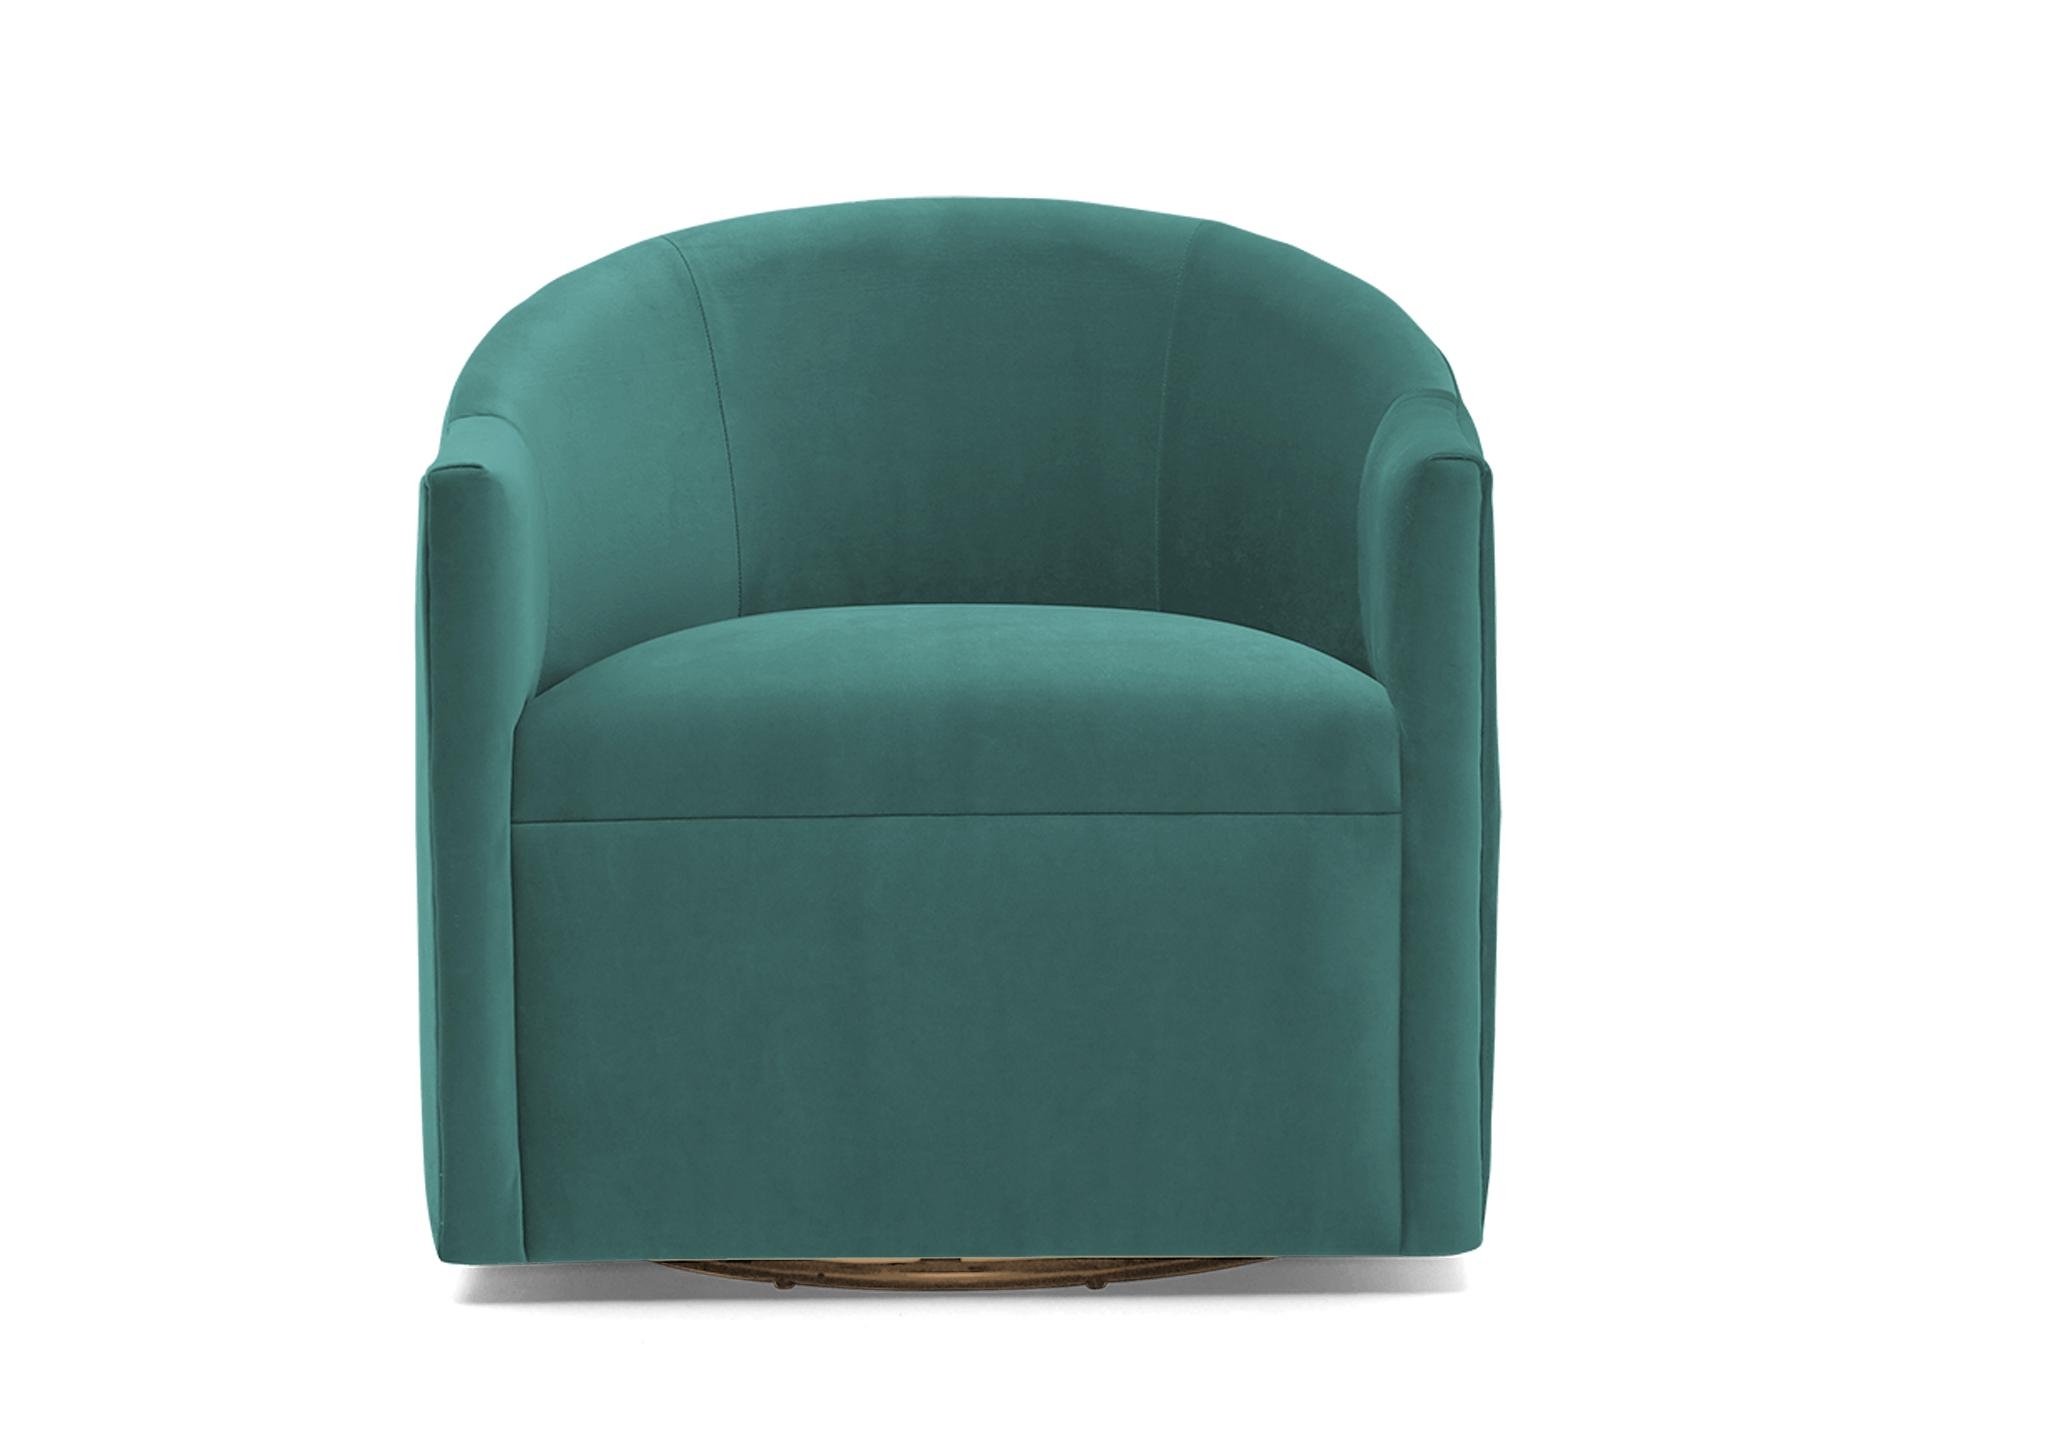 Green Jolie Mid Century Modern Swivel Chair - Essence Aqua - Image 0